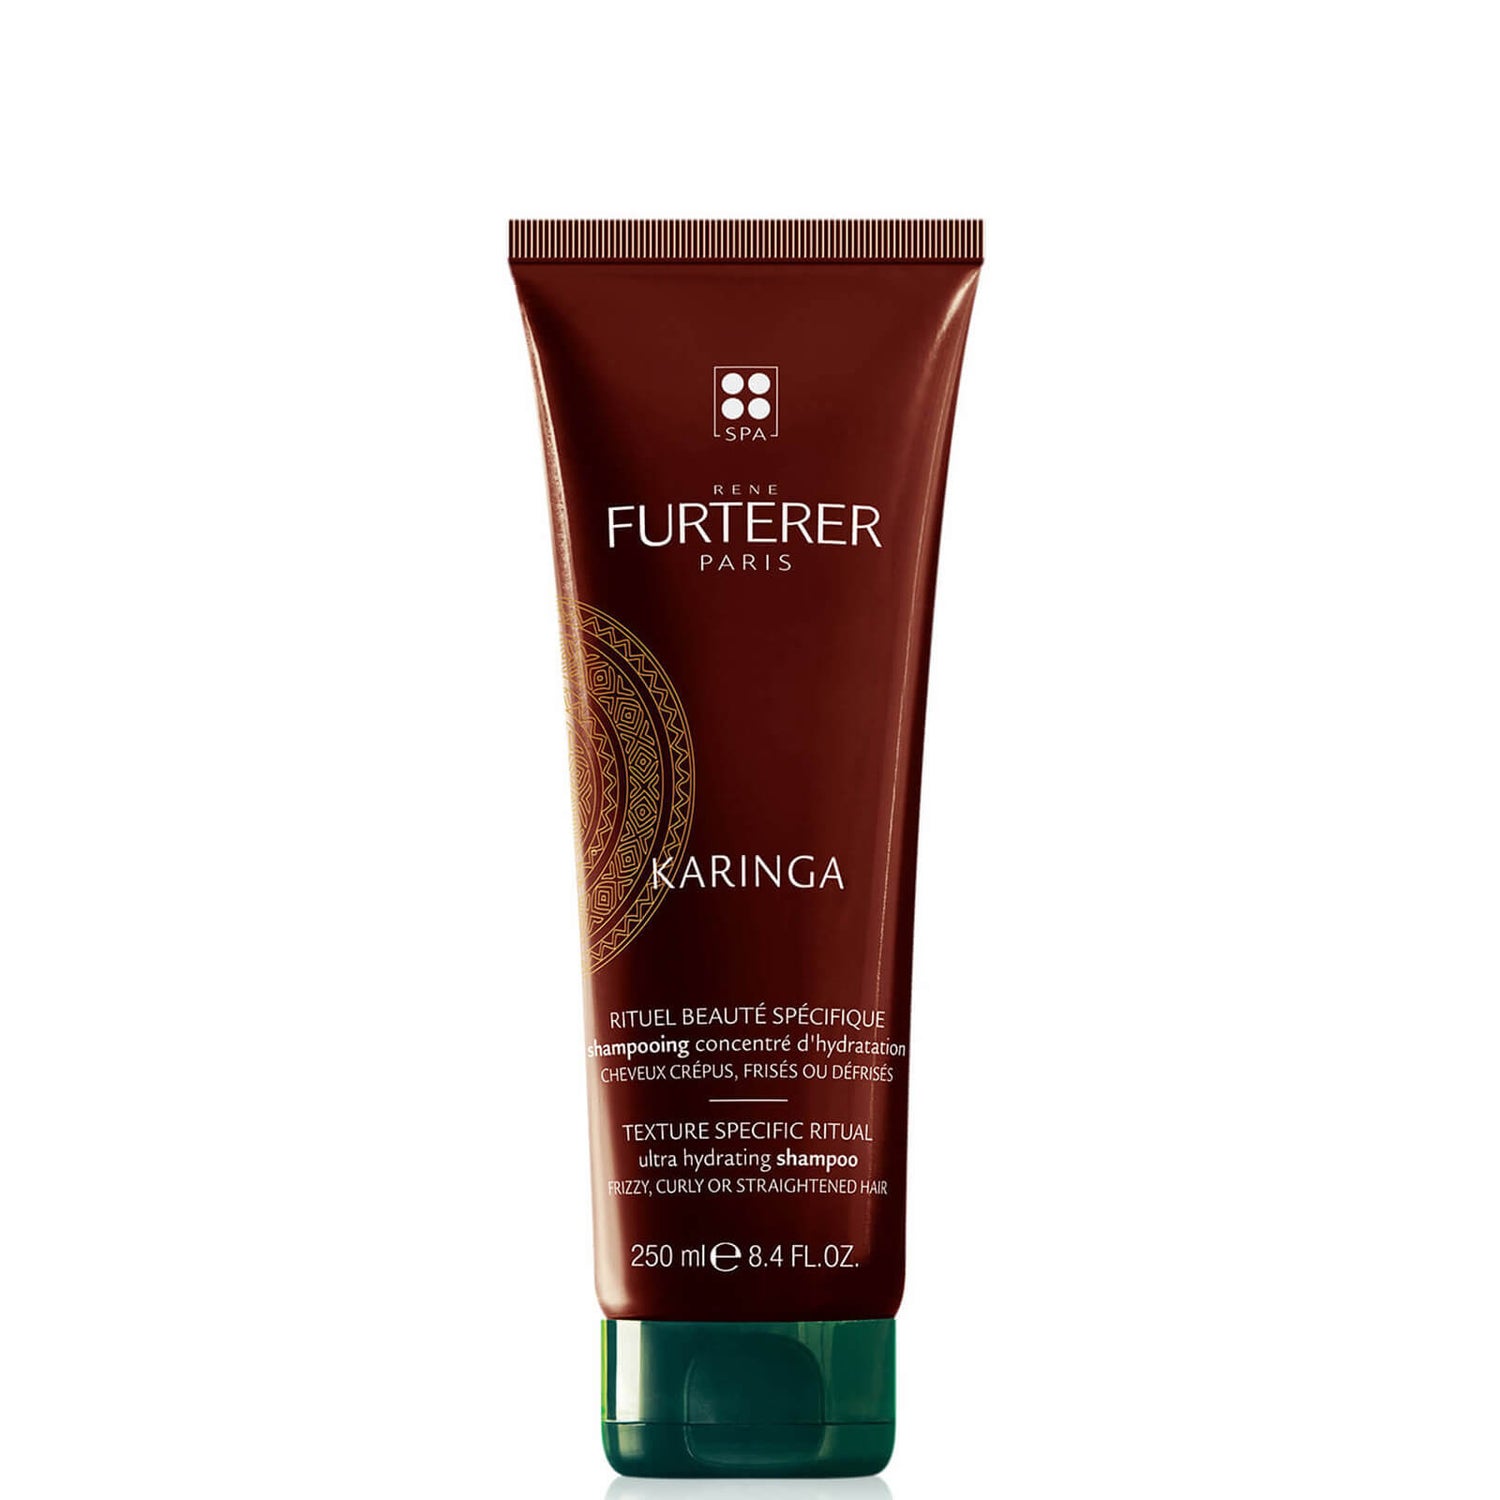 René Furterer Karinga Ultra Hydrating Shampoo 8.4 fl.oz